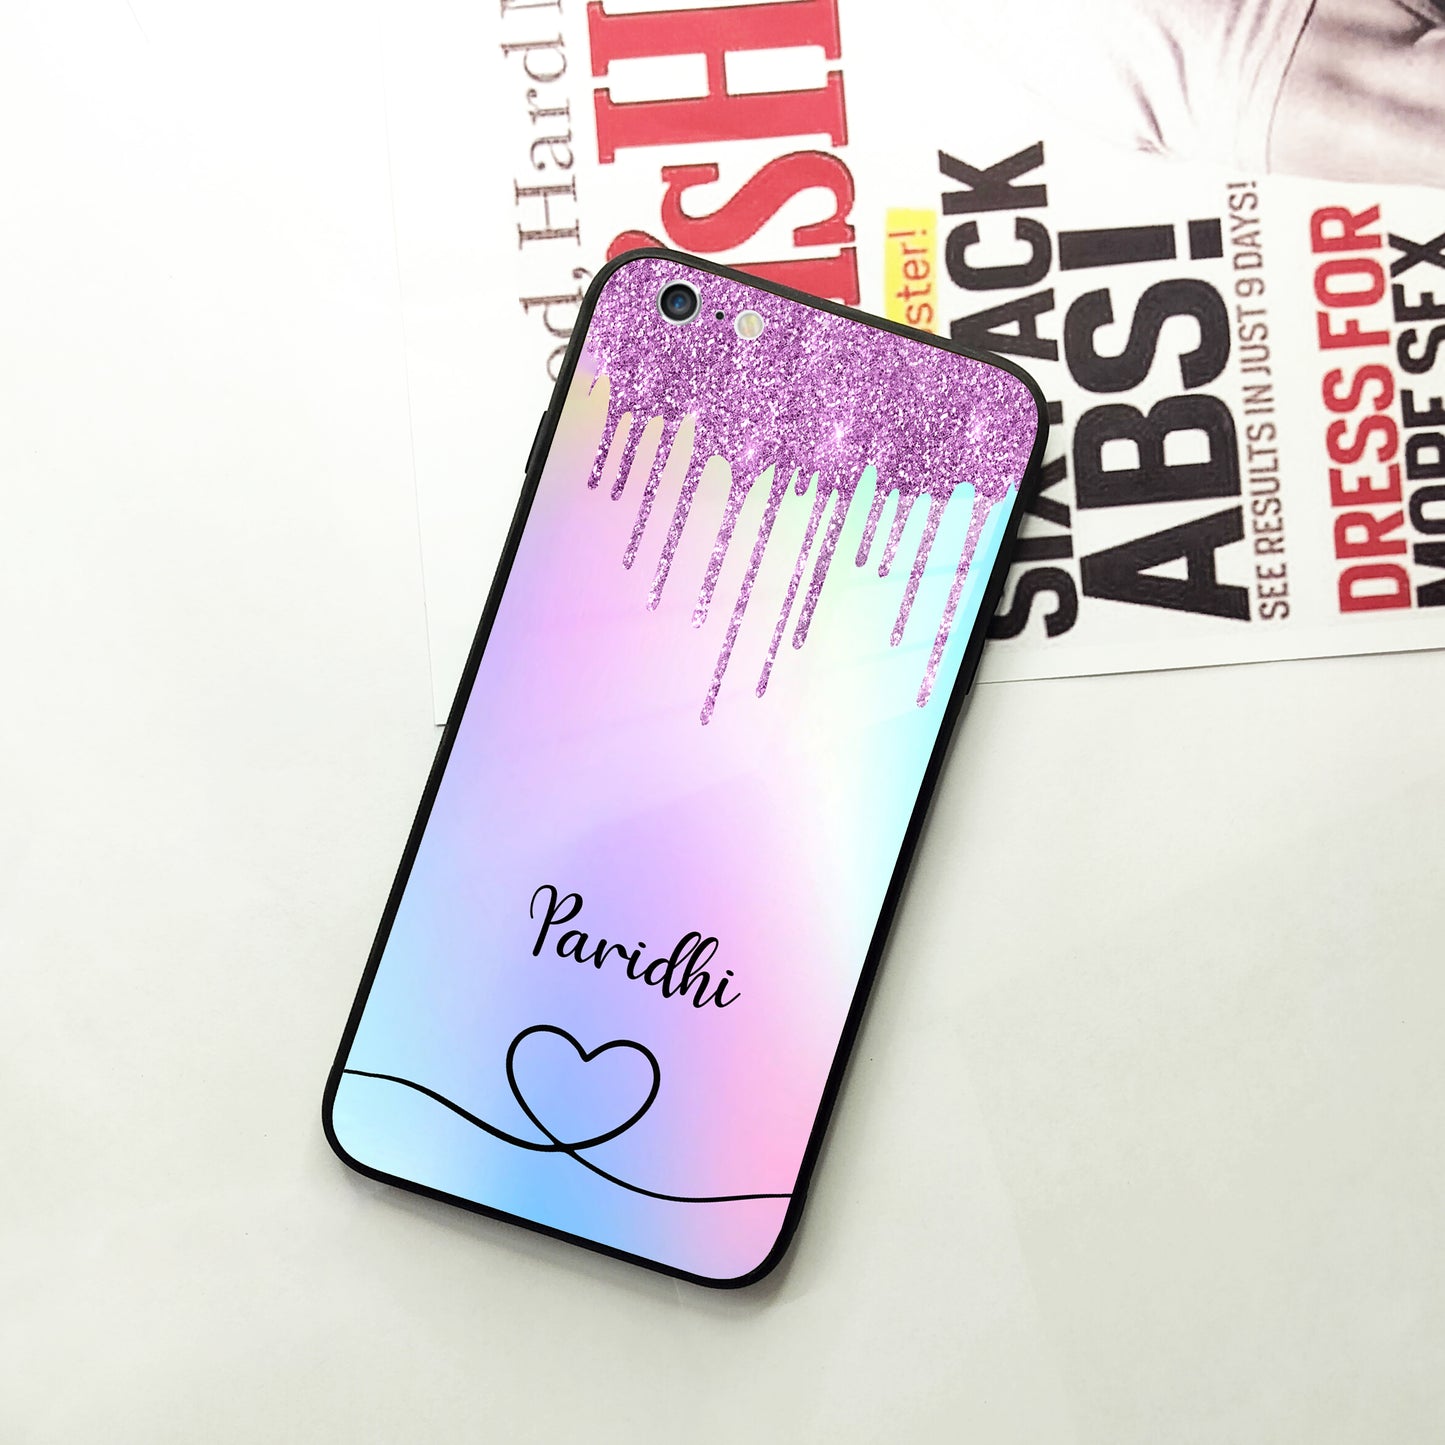 MultiColor Glitter Glass Case For iPhone